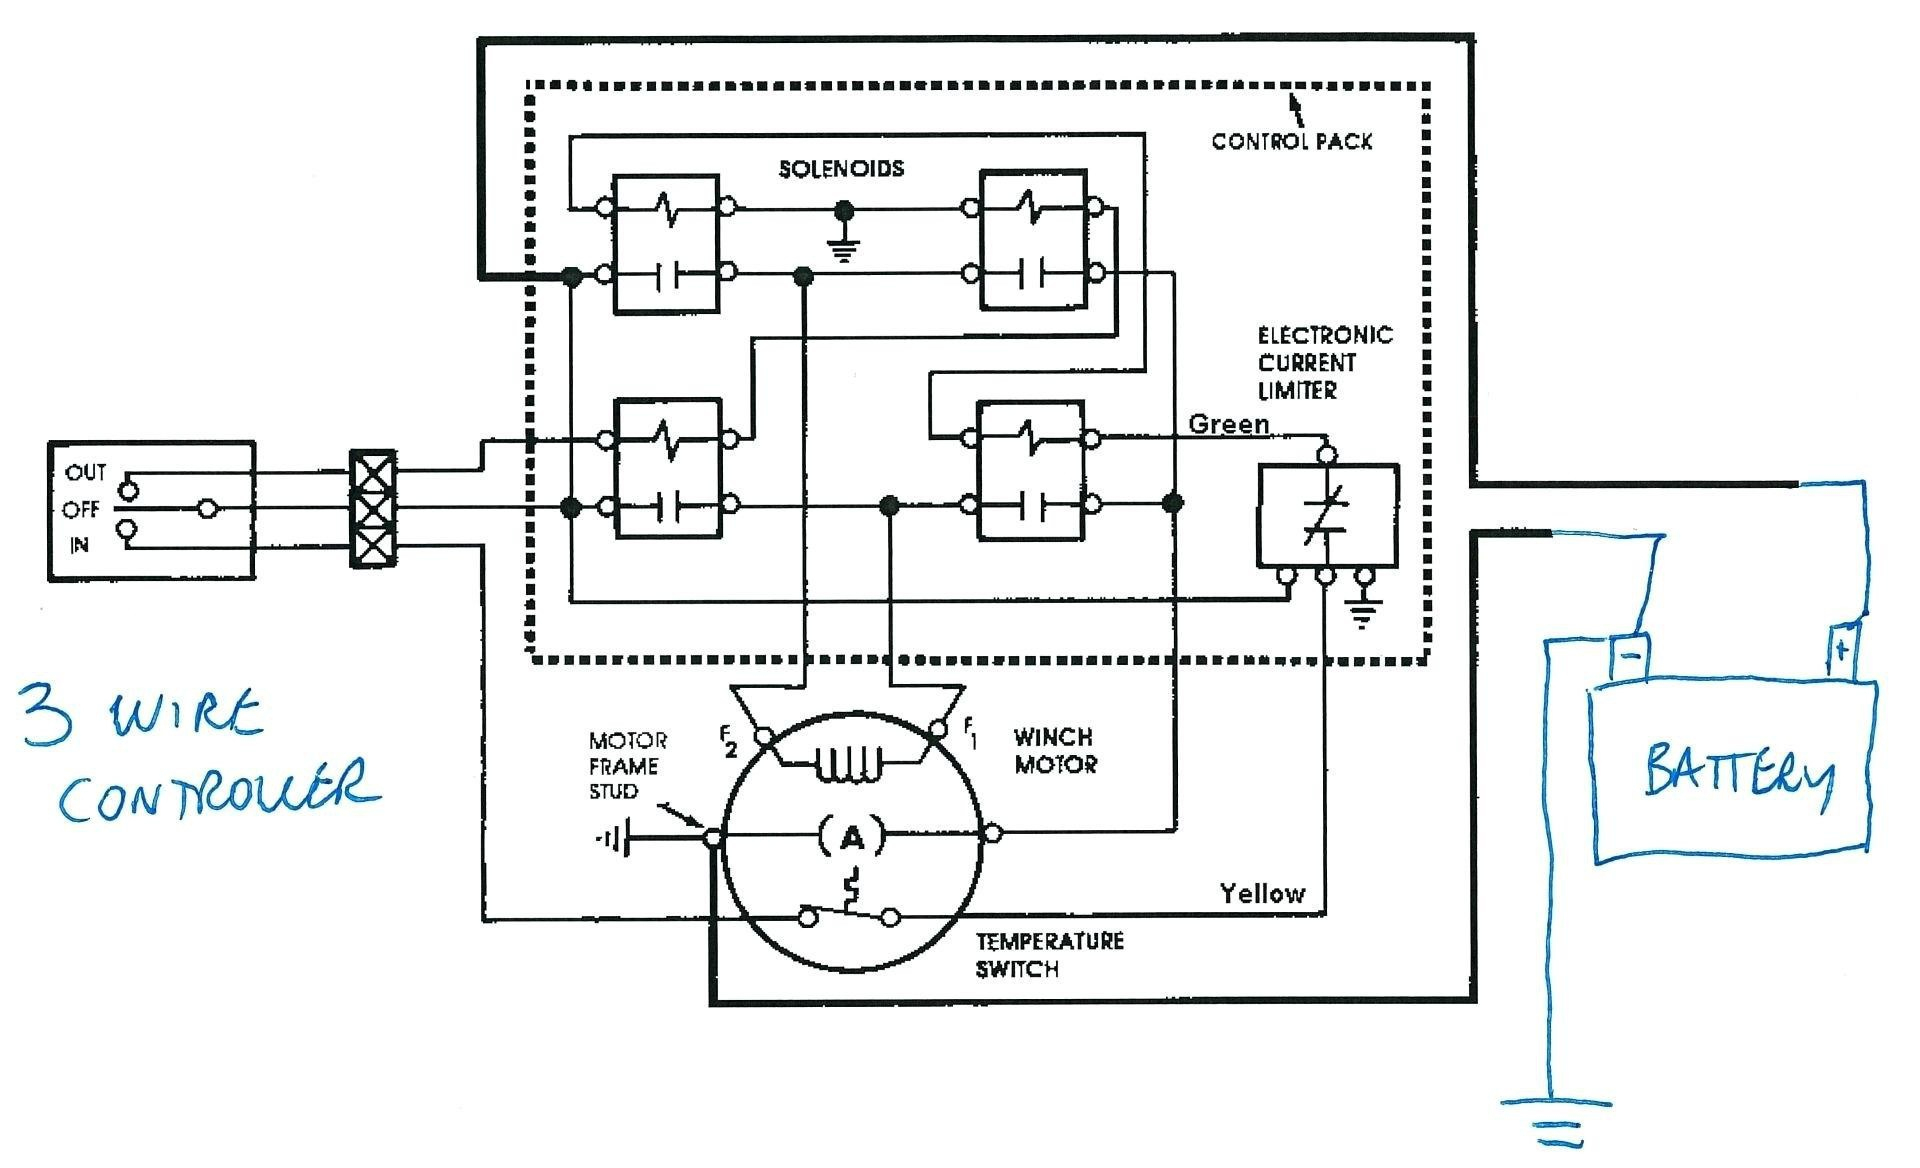 Lighting Contactors Wiring Diagrams | Wiring Diagram - Square D 8903 Lighting Contactor Wiring Diagram